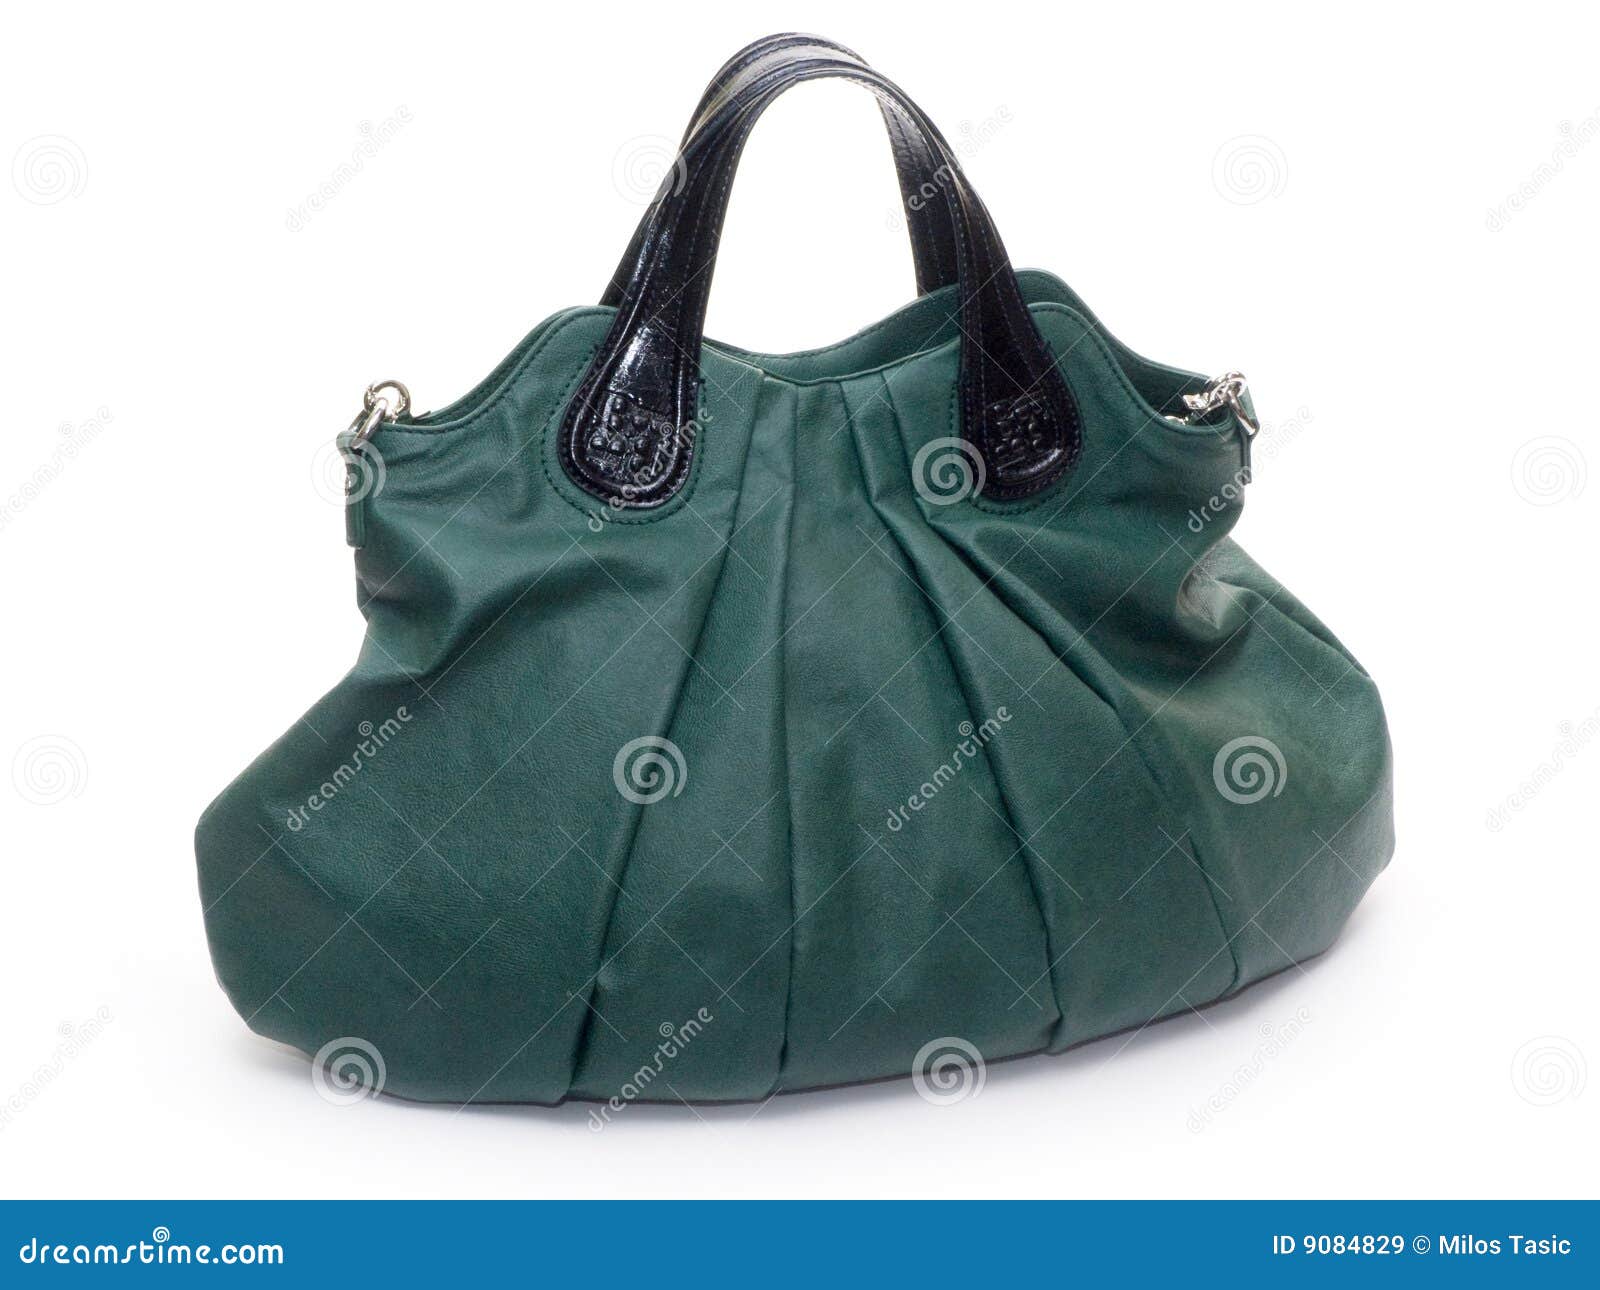 Green bag stock image. Image of modern, studio, closeup - 9084829